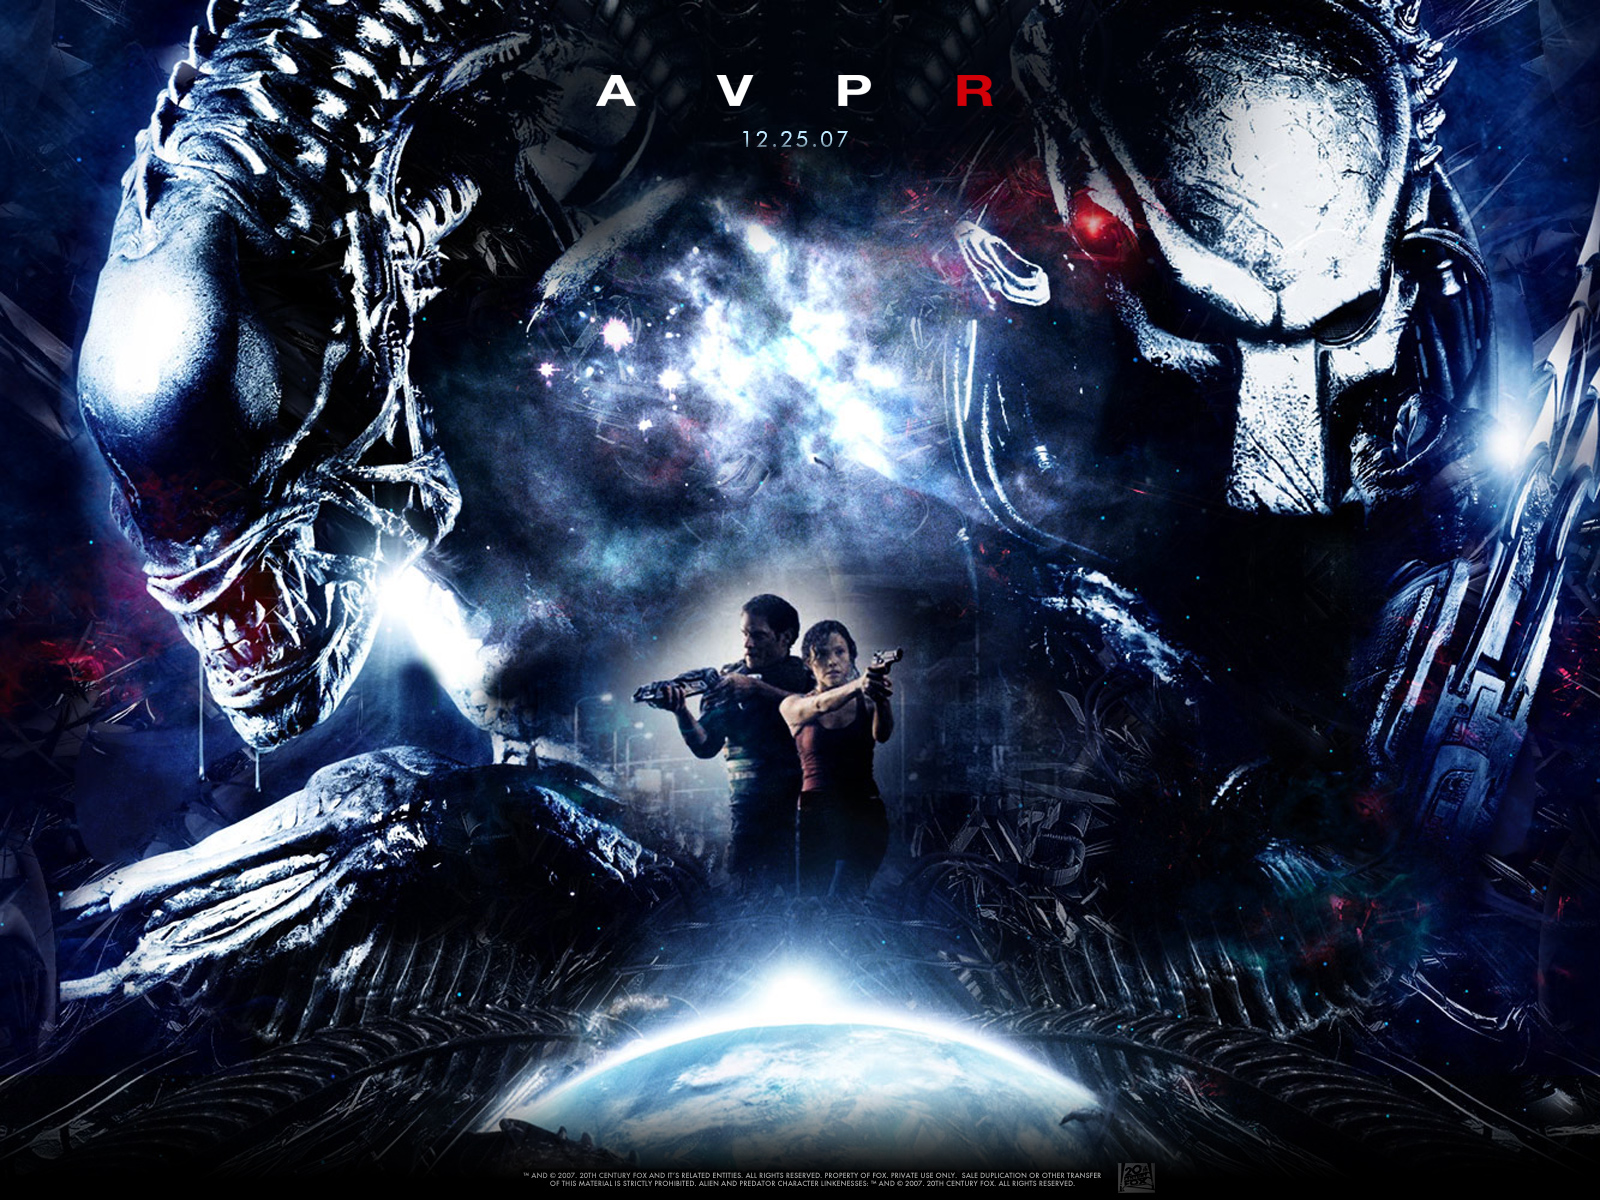 AVP: Alien Vs. Predator #7